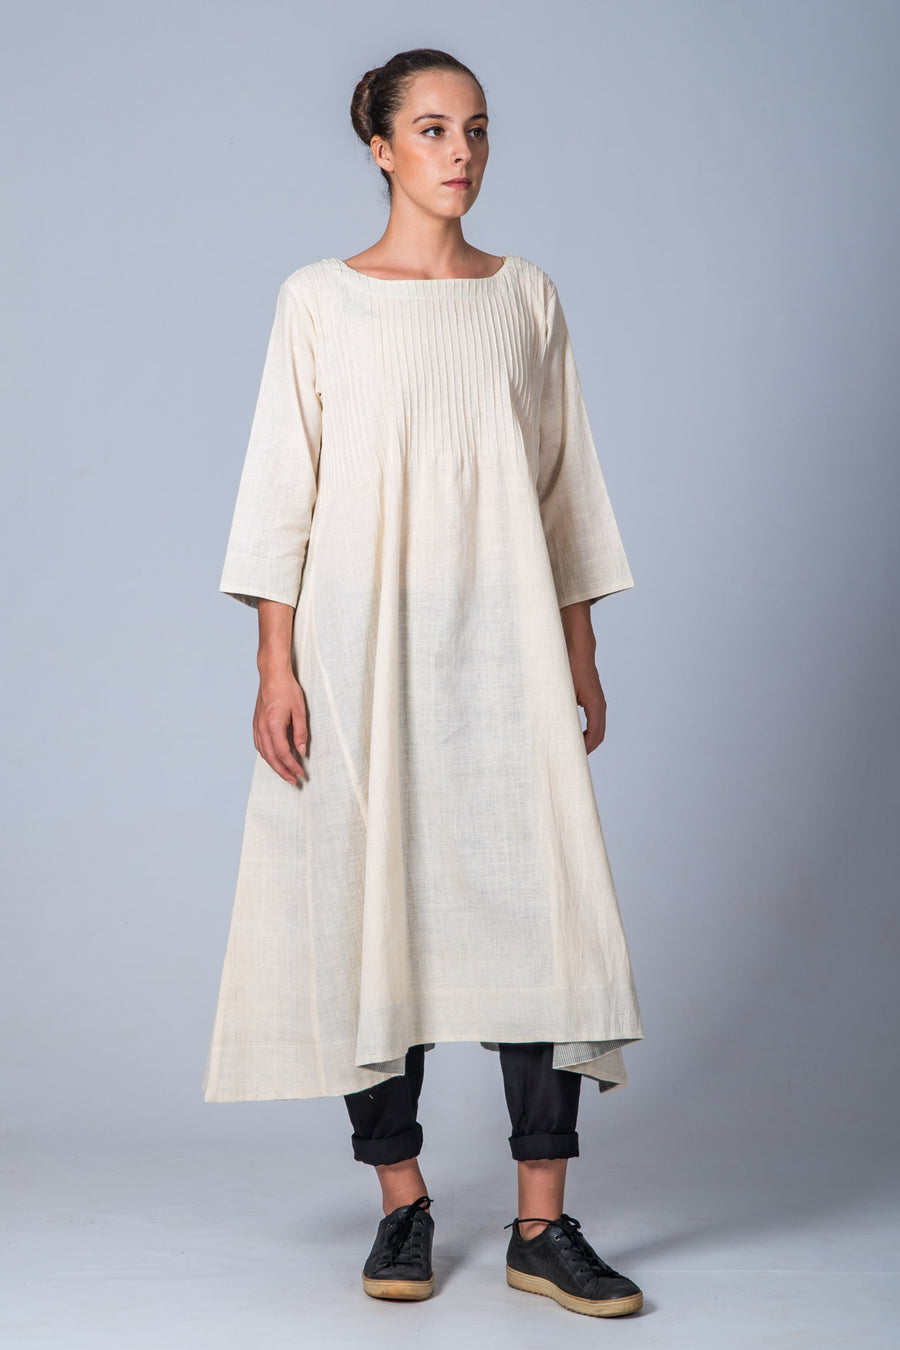 Off-white Handspun Handwoven Dress - UDUPU - Upasana Design Studio